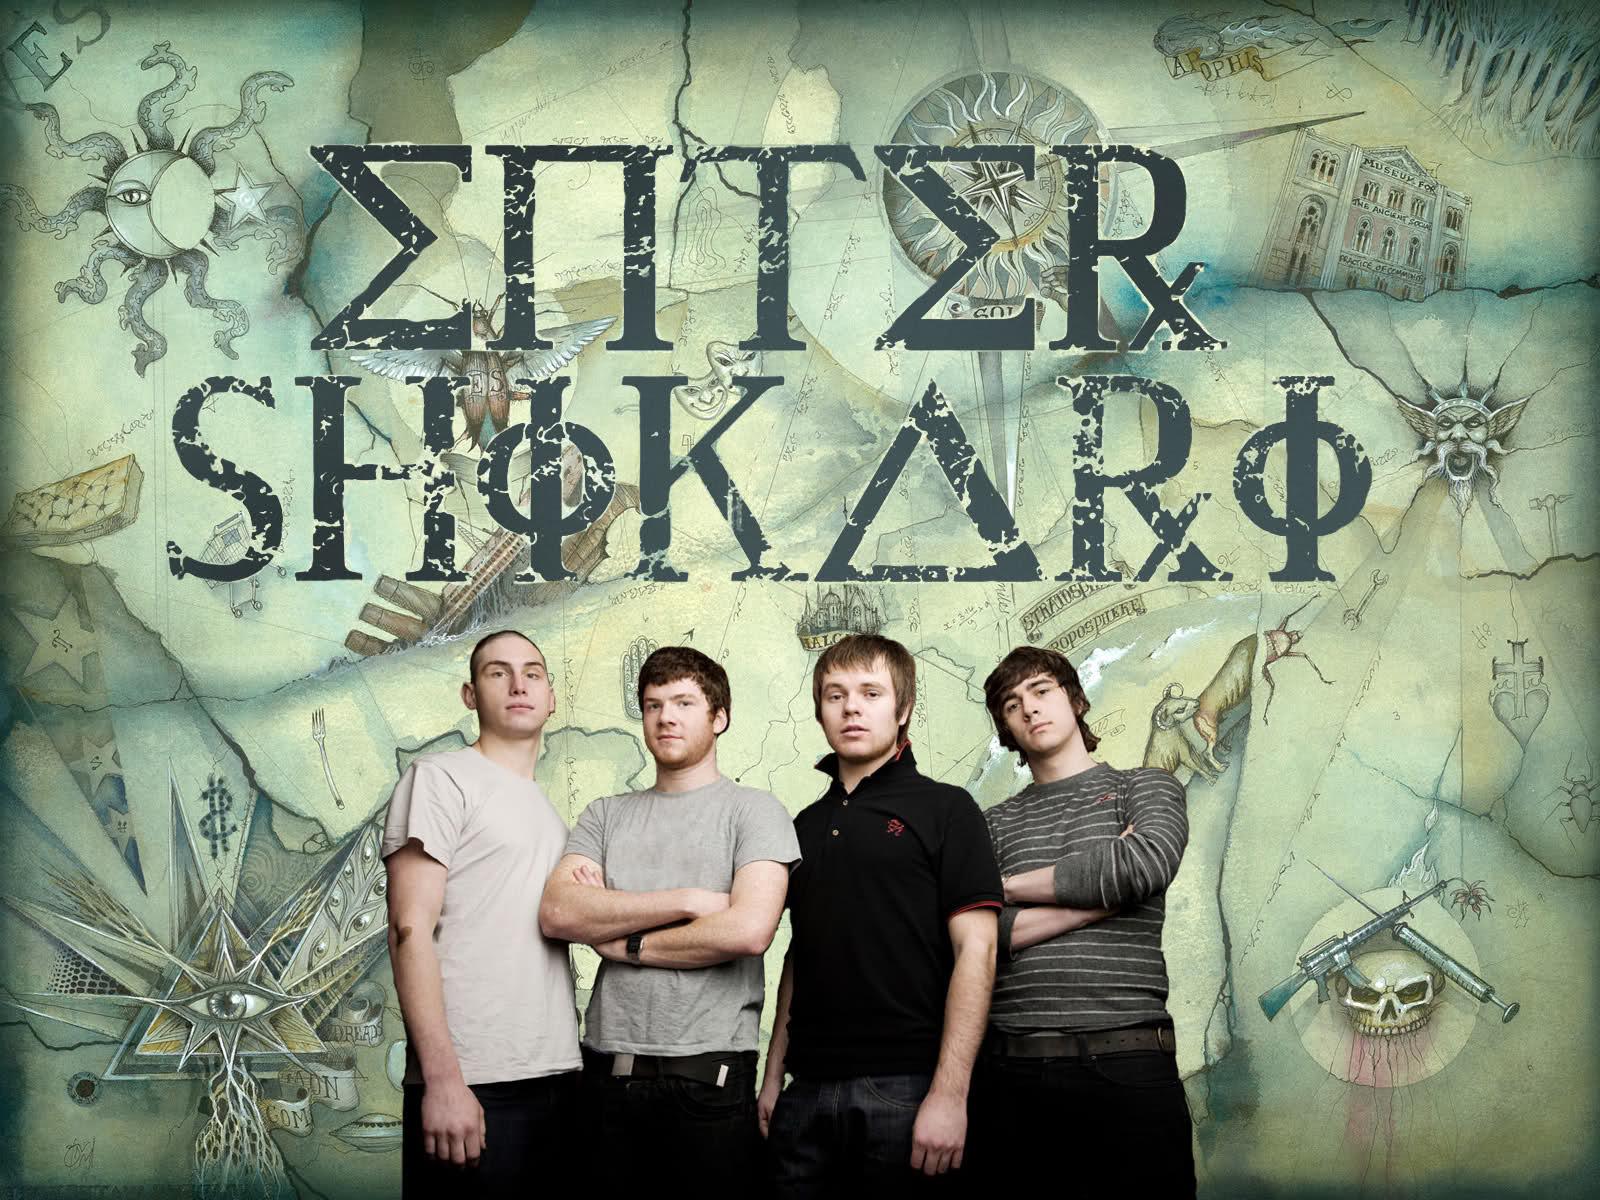 es, enter, shikari, wallpaper, music Picture, es, enter, shikari